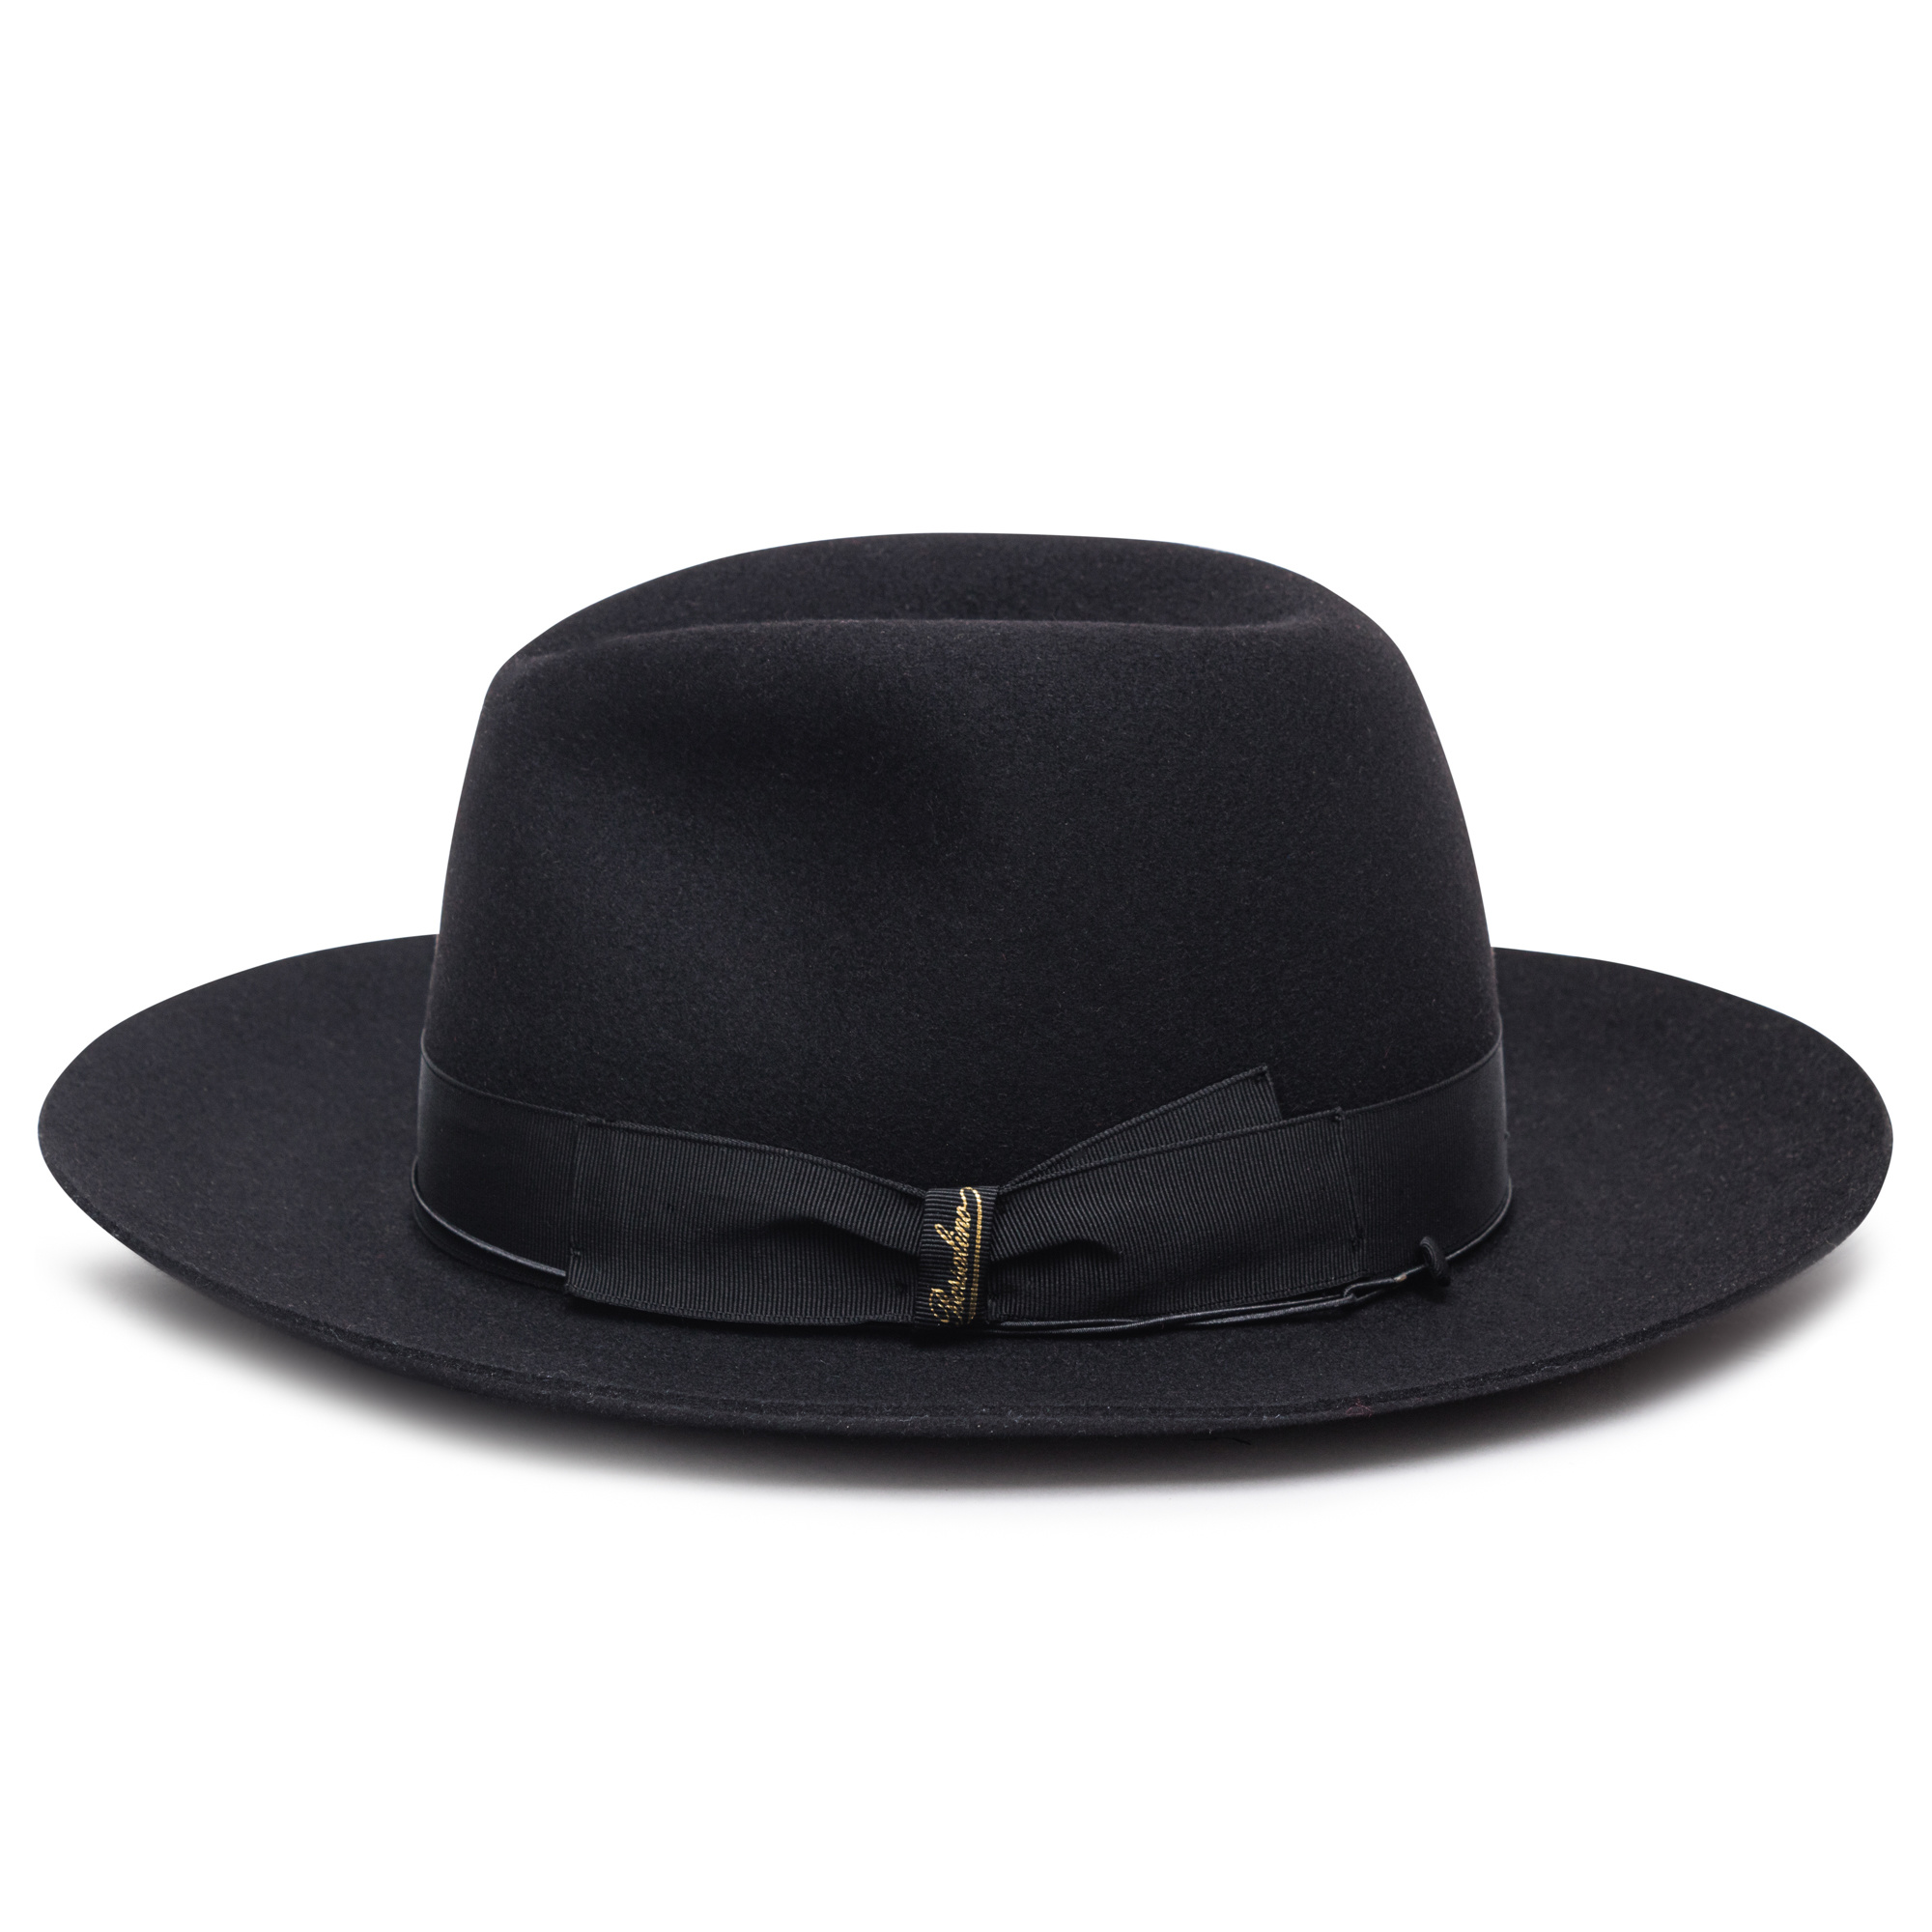 Borsalino - chapeau borsalino classique - chapeau feutre poil